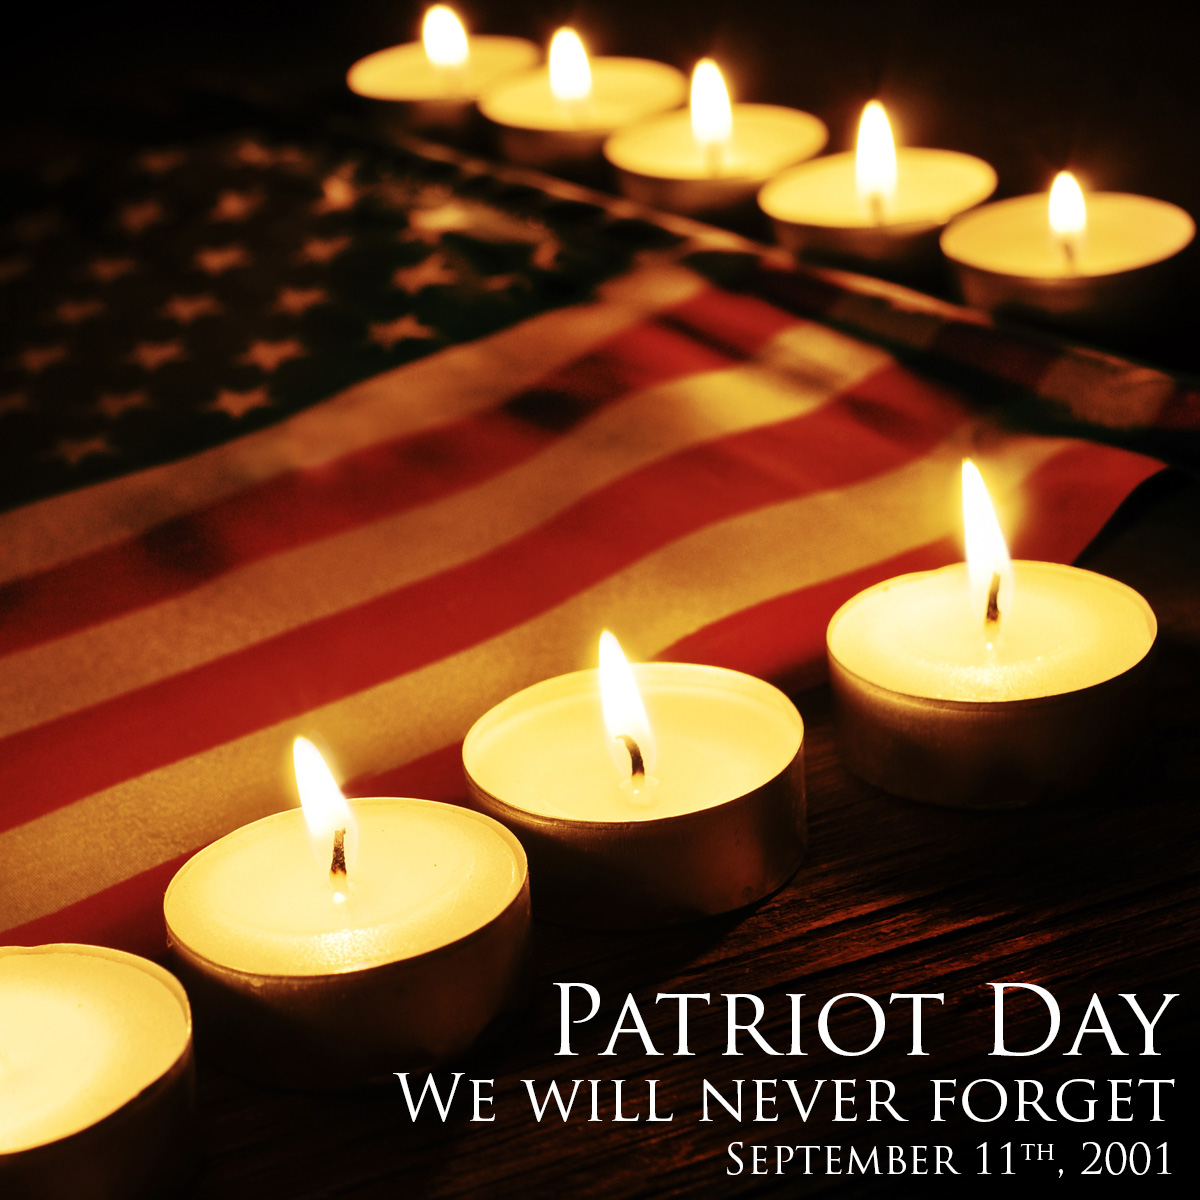 Patriot Day 2016